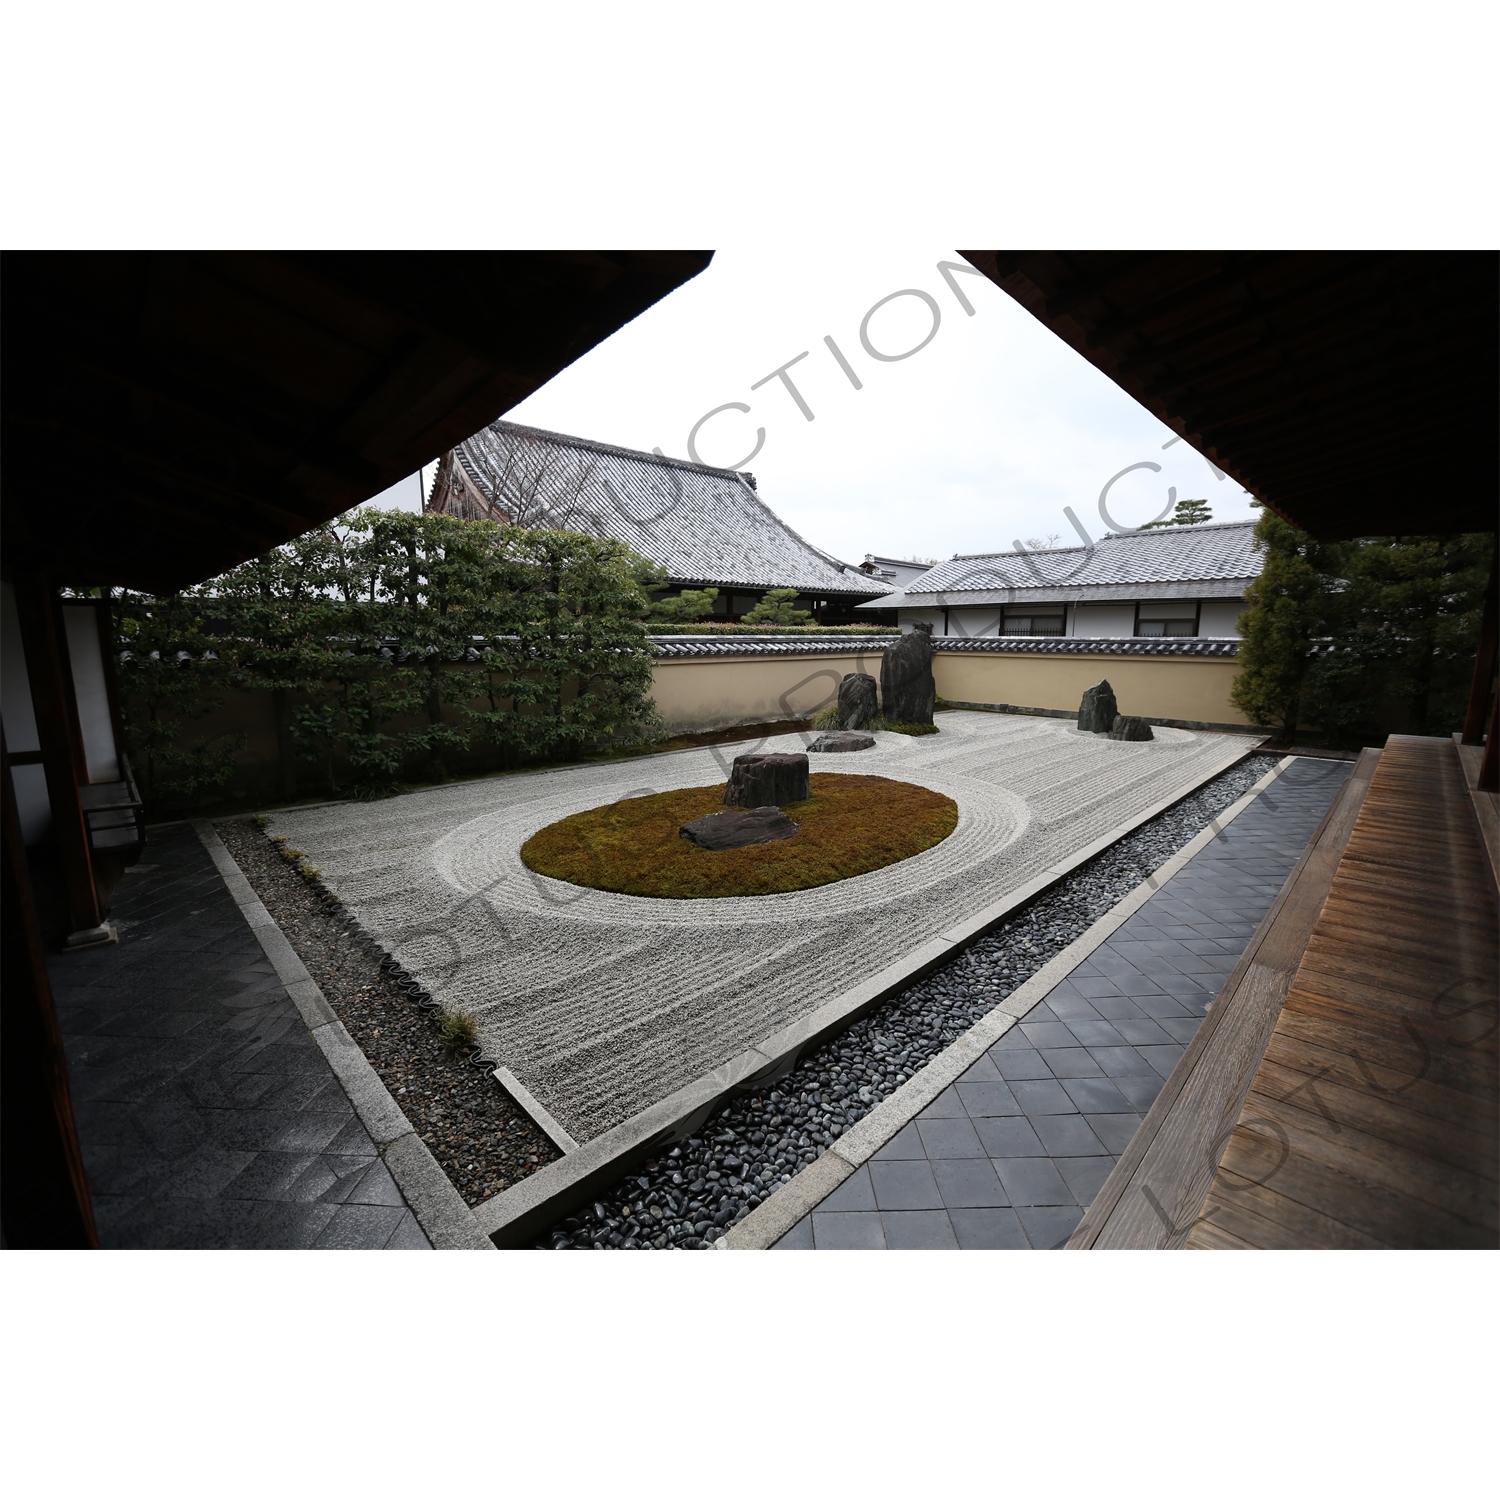 Ryogen-in Rock Garden in the Daitoku-ji Complex in Kyoto